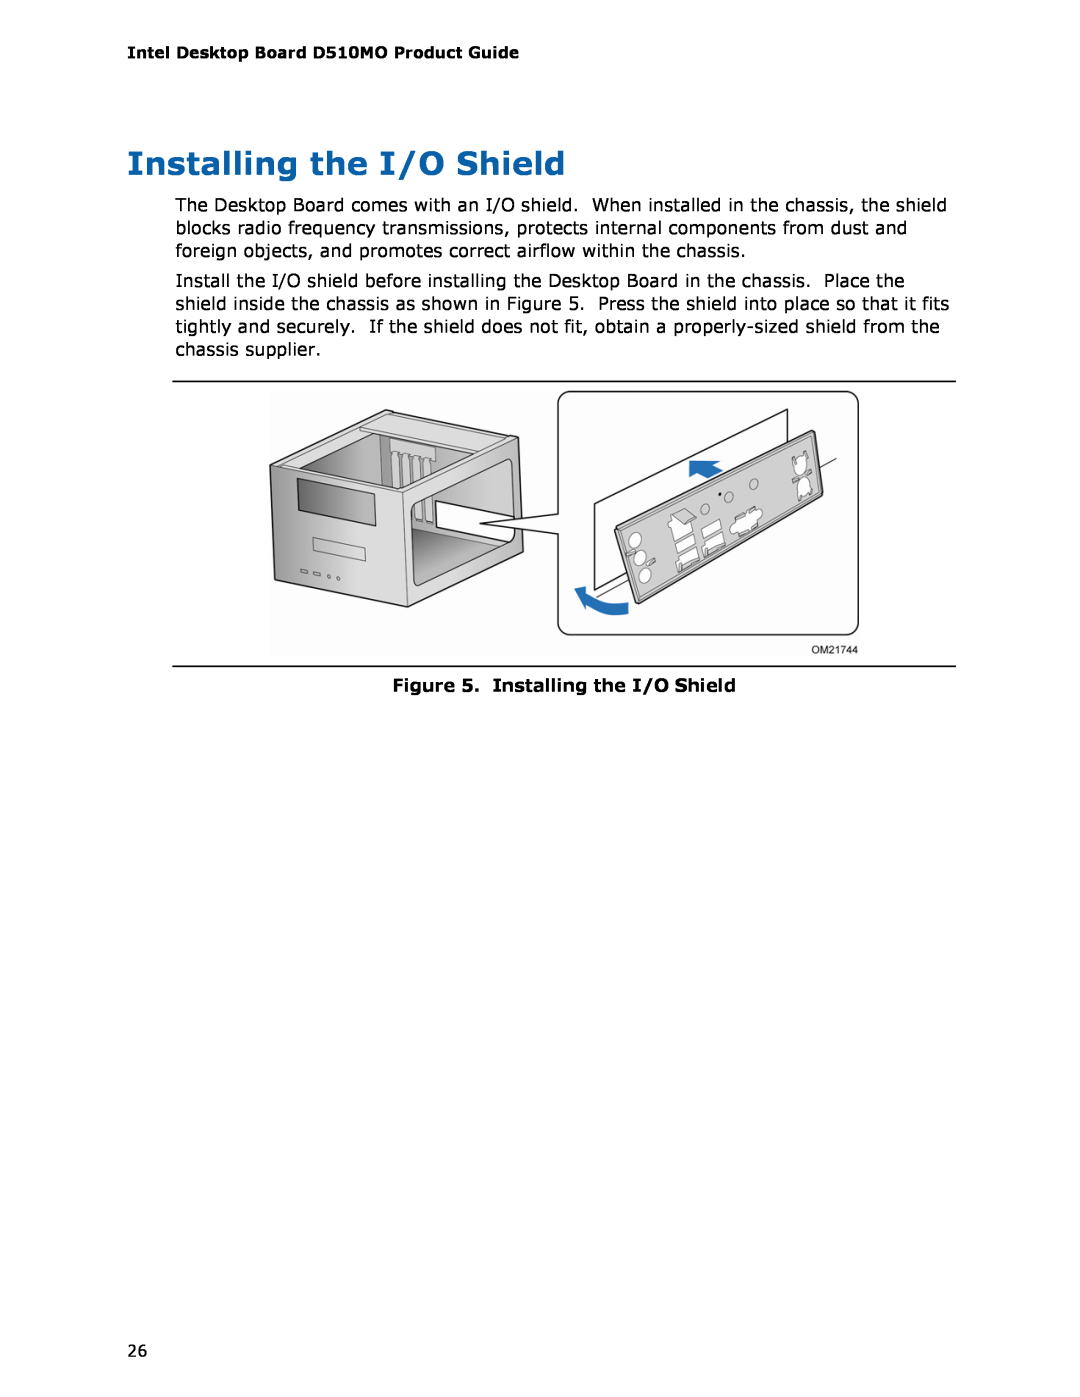 Intel D510MO manual Installing the I/O Shield 